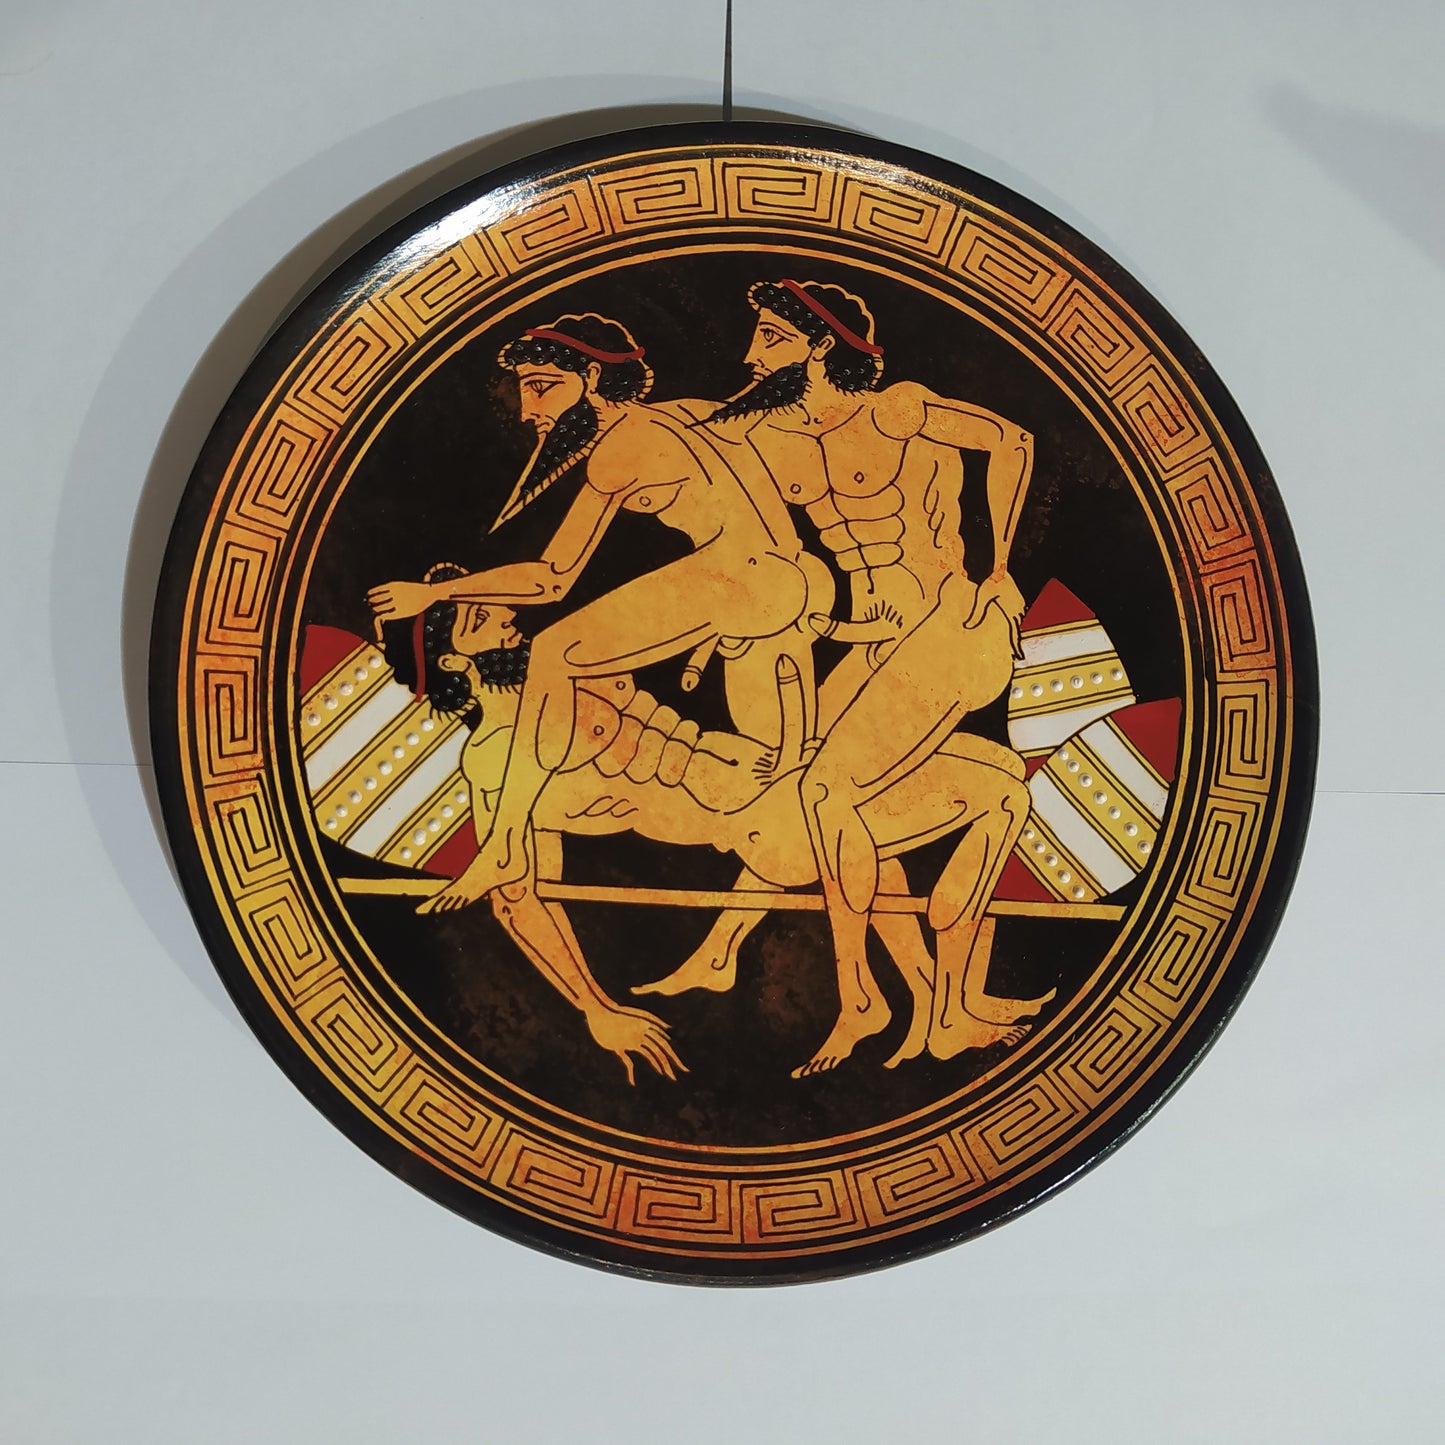 Homoerotic Scene between Three Males  - Athens, 450 BC - Representation of Red Figure Vessel - Ceramic - Meander design - Handmade in Greece